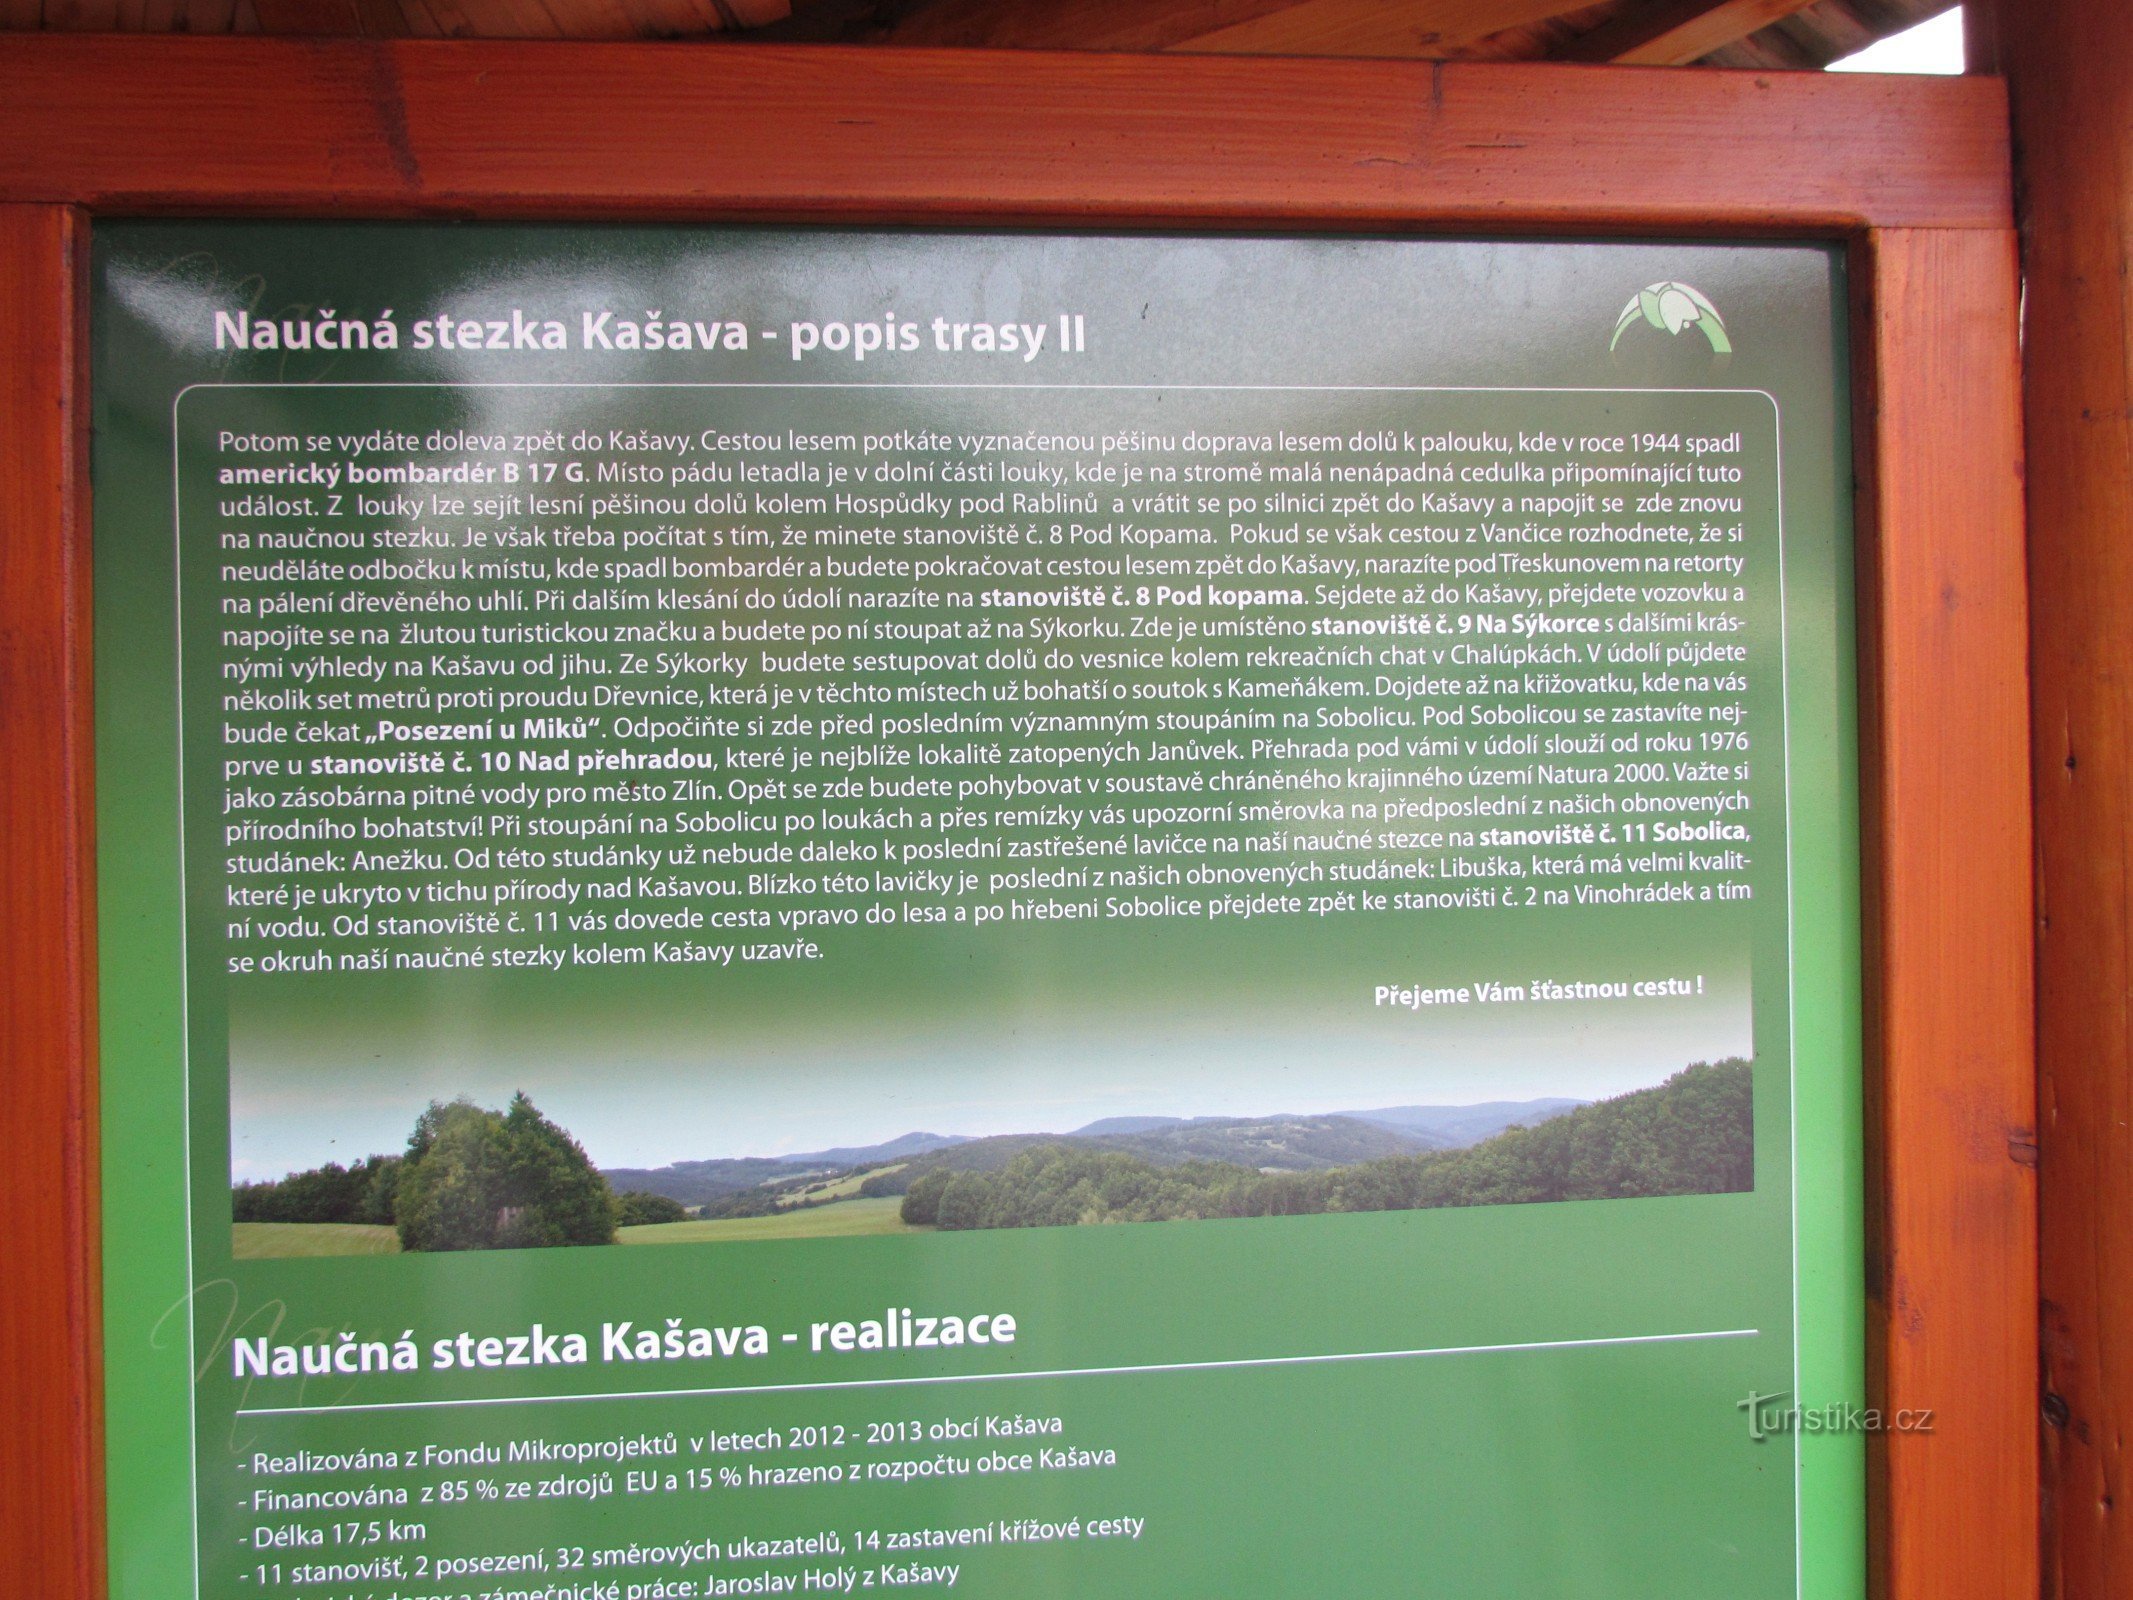 Educational trail Kasava